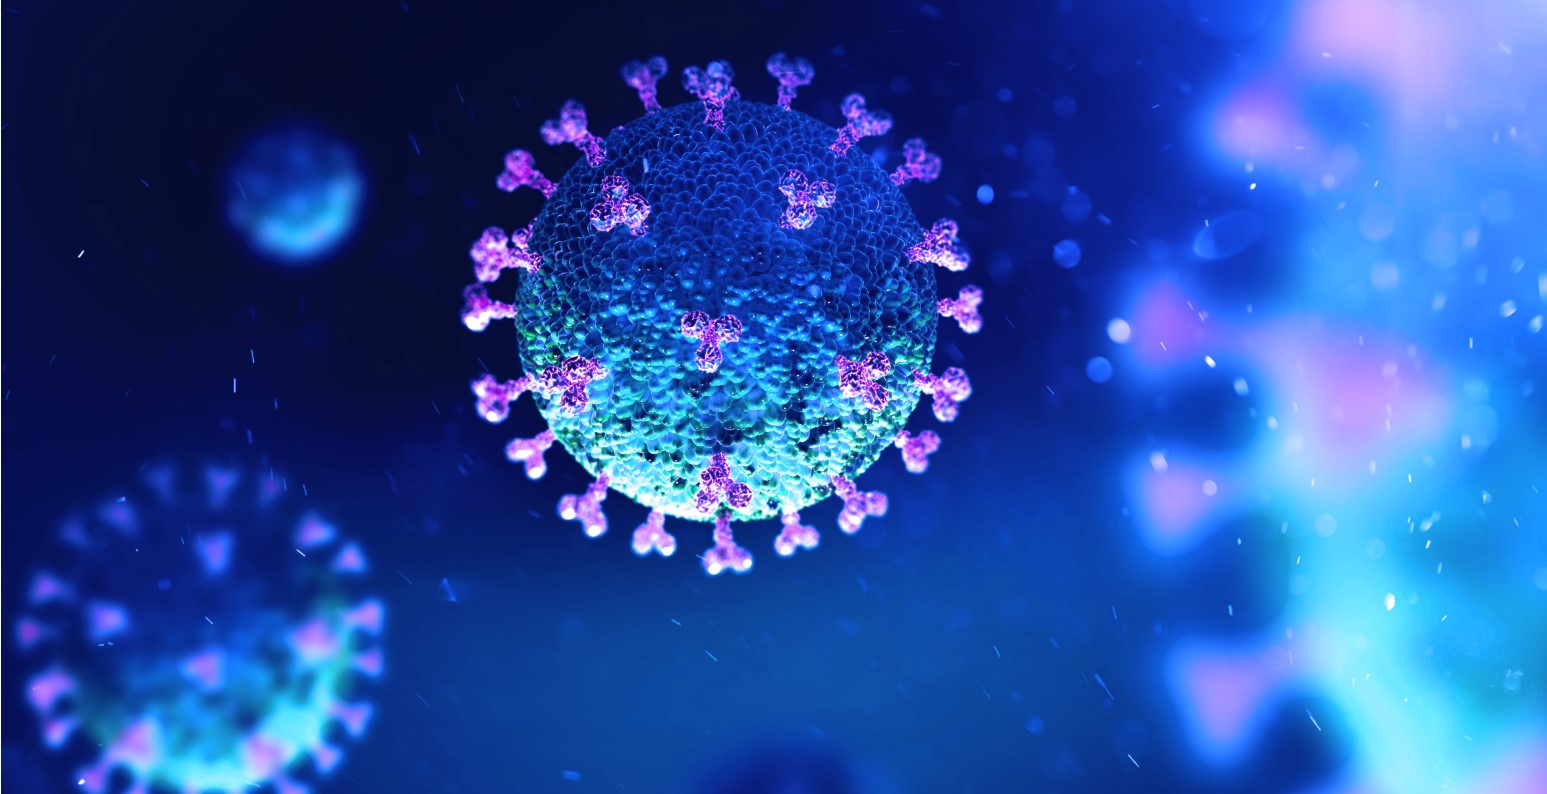 Coronavirus virus depicted in blue and and purple